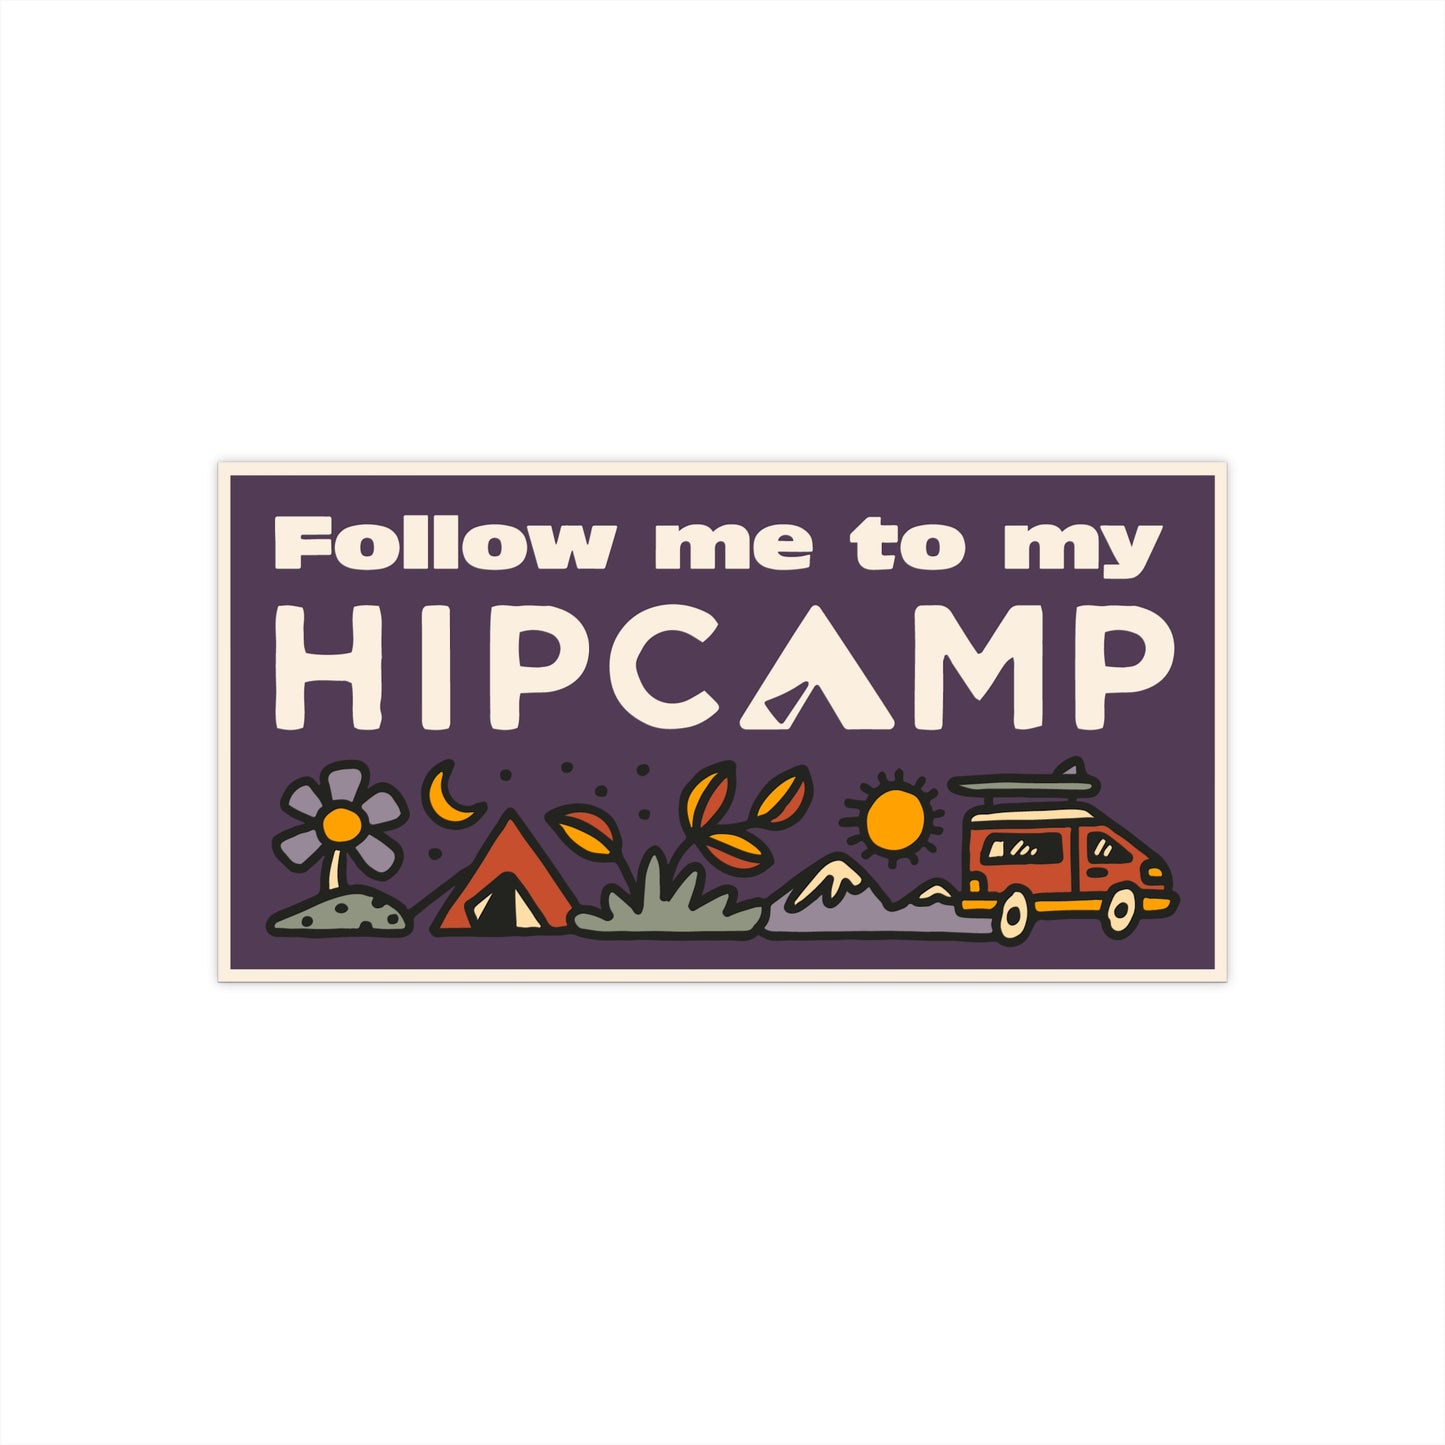 Follow me to my Hipcamp Bumper Sticker